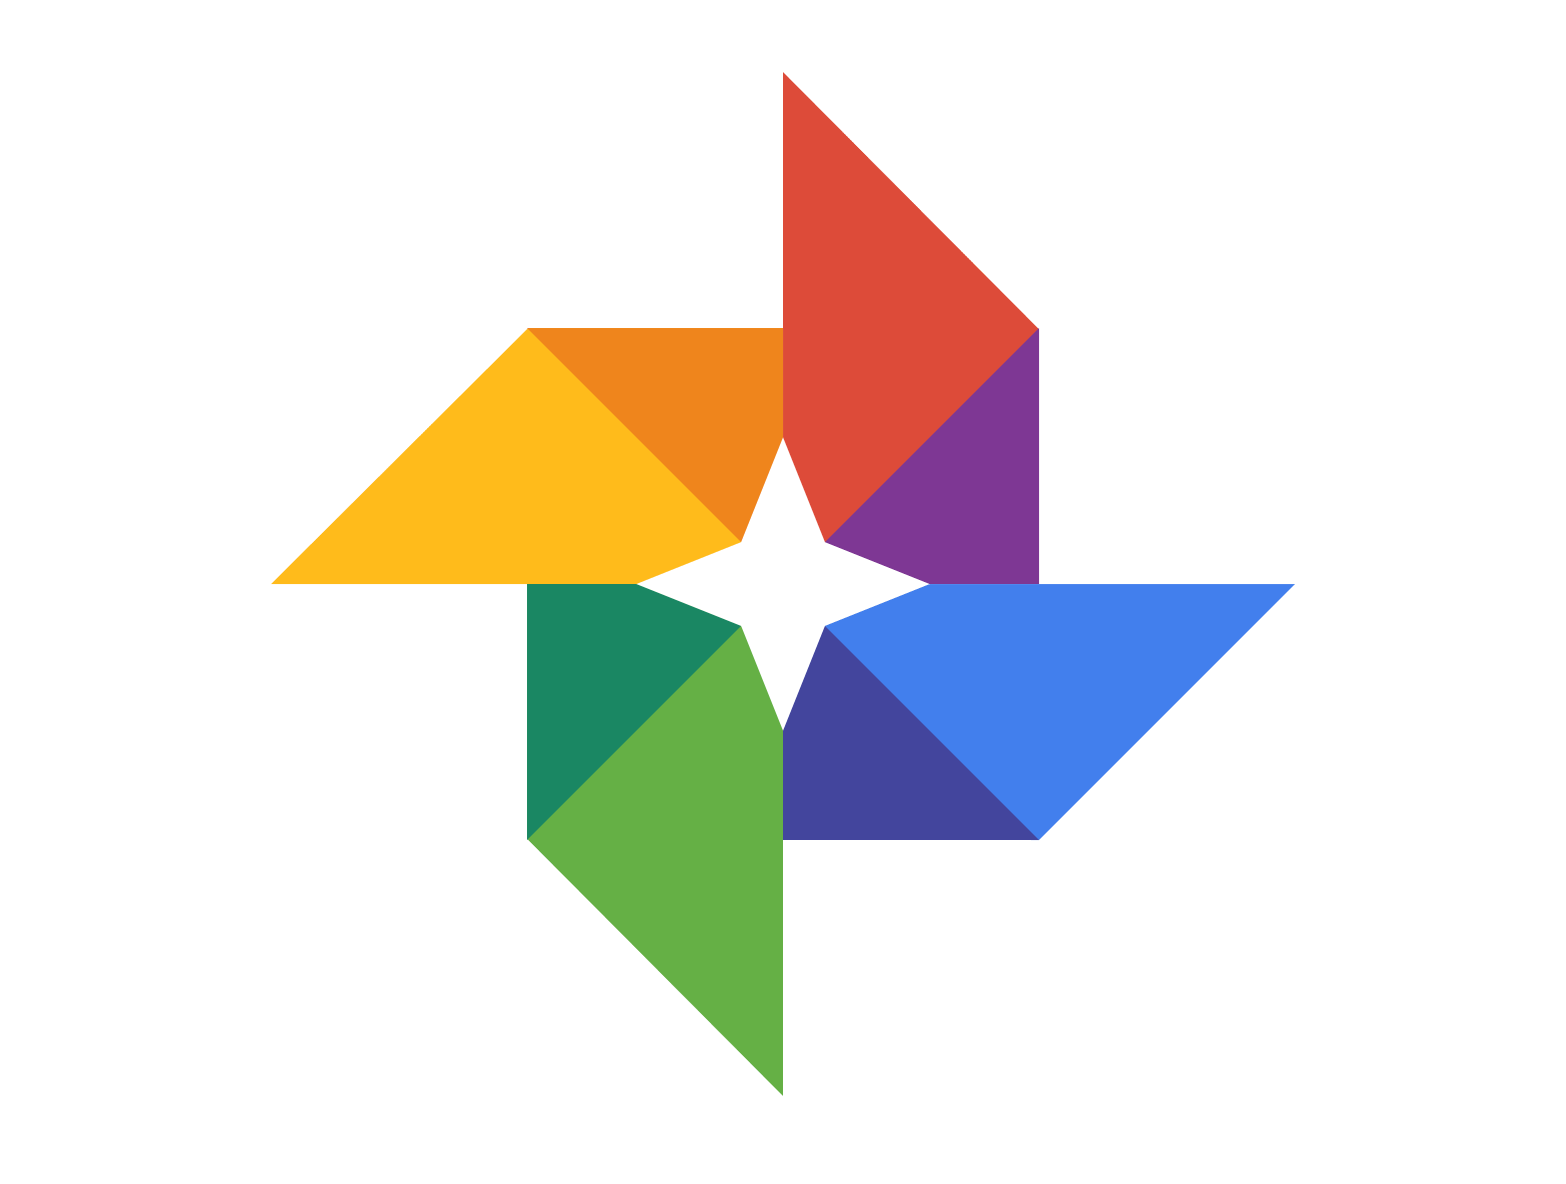 nexusae0_Google-Photos-icon-logo